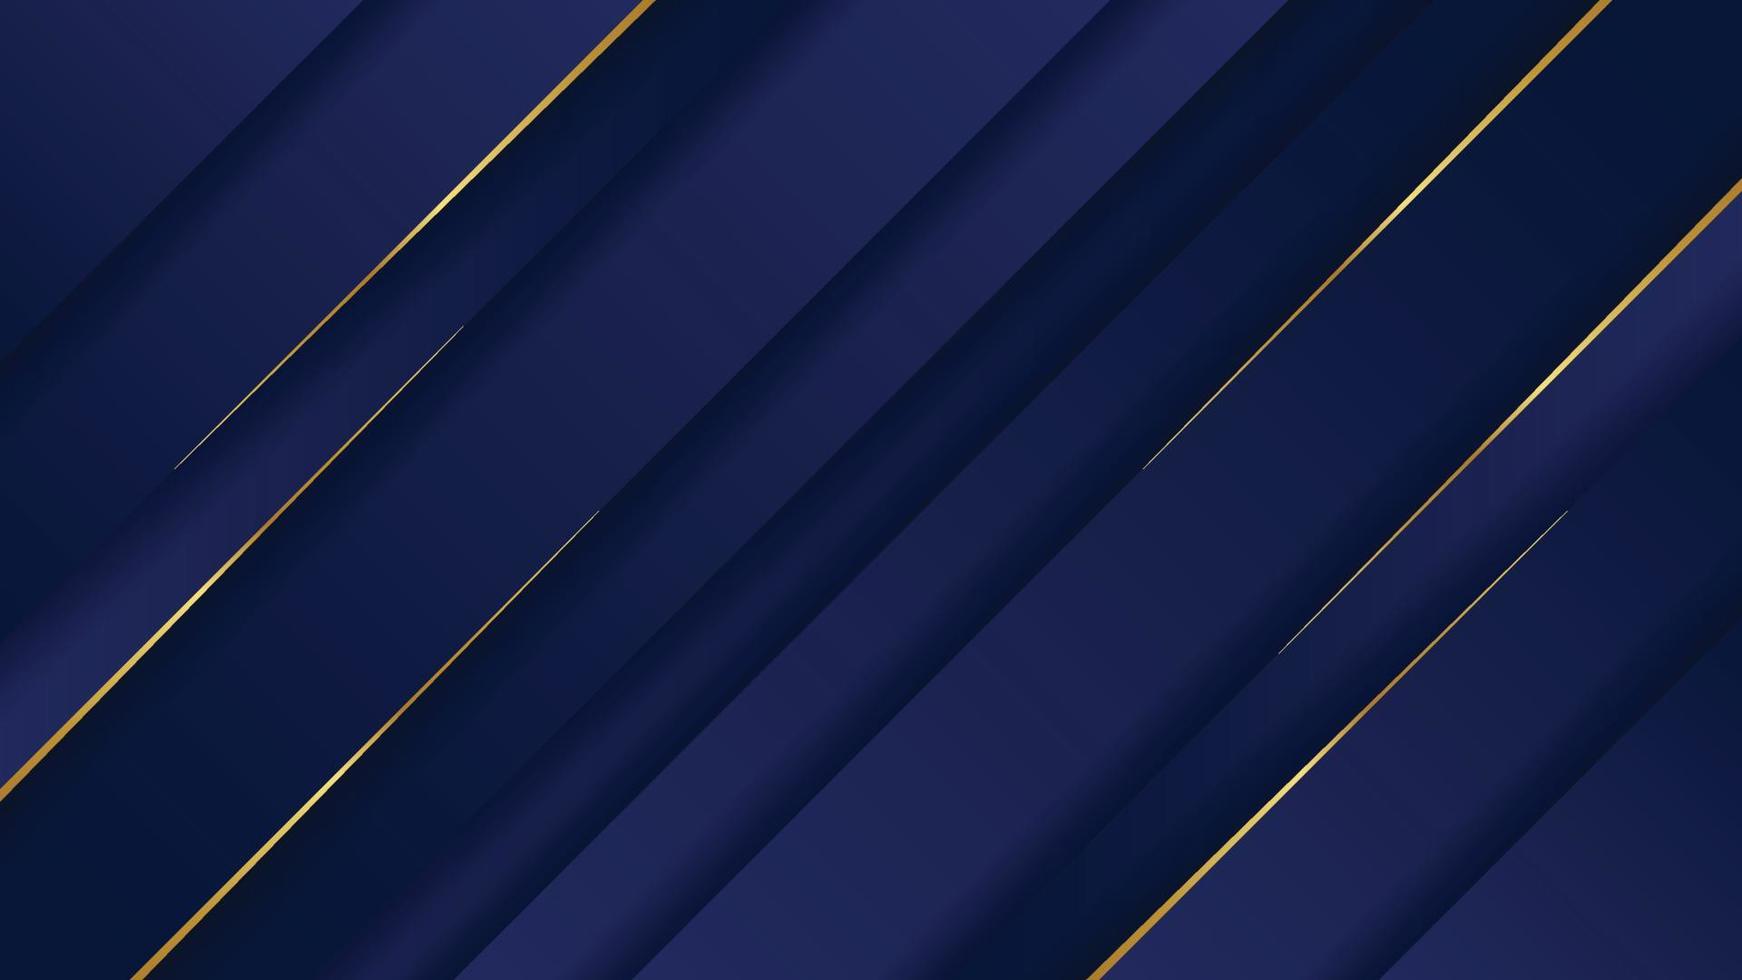 abstrakt lutning Marin blå med lyx gyllene linje mall. vektor